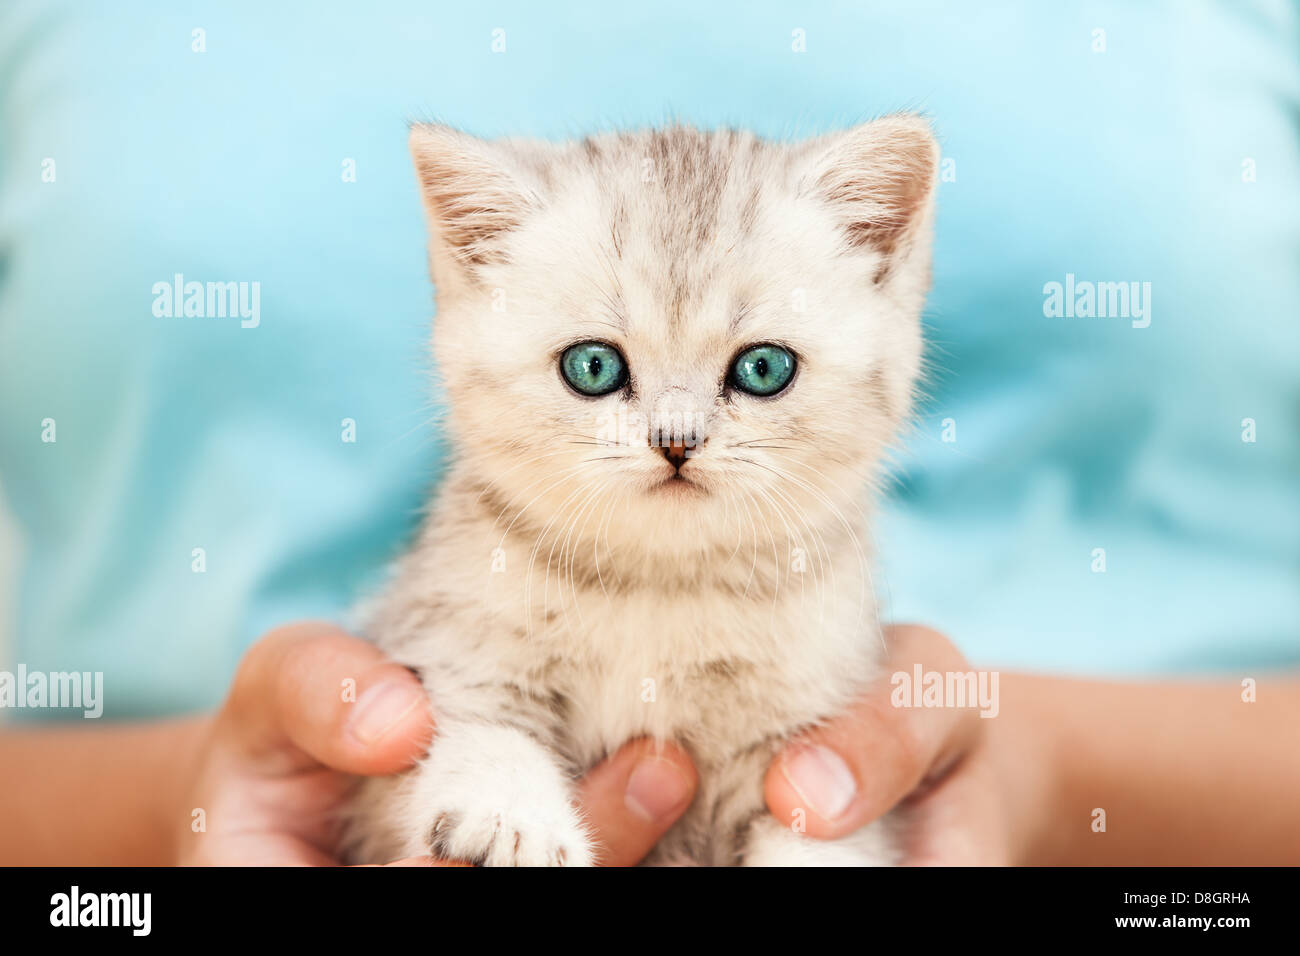 Human hands holding little cat Stock Photo